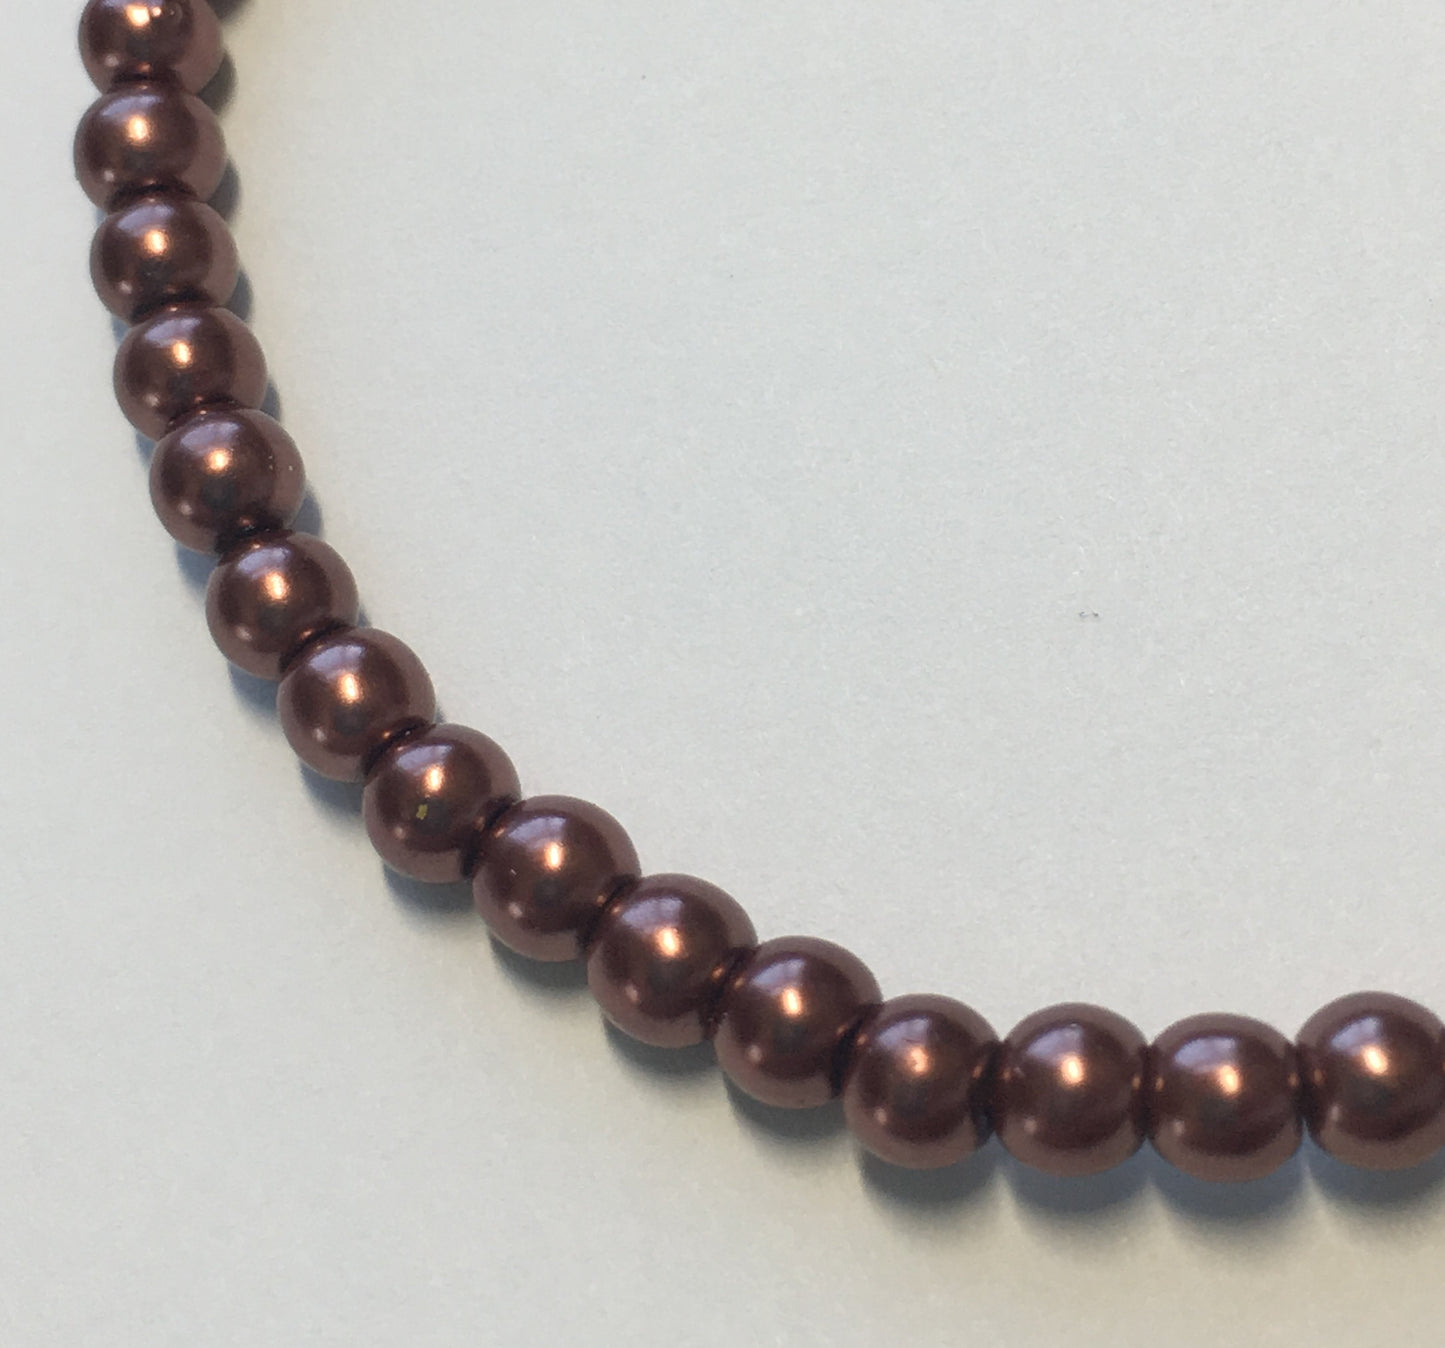 Darice Brown Strung Round Glass Pearls, 4 mm / 12" Strand - 88 Beads